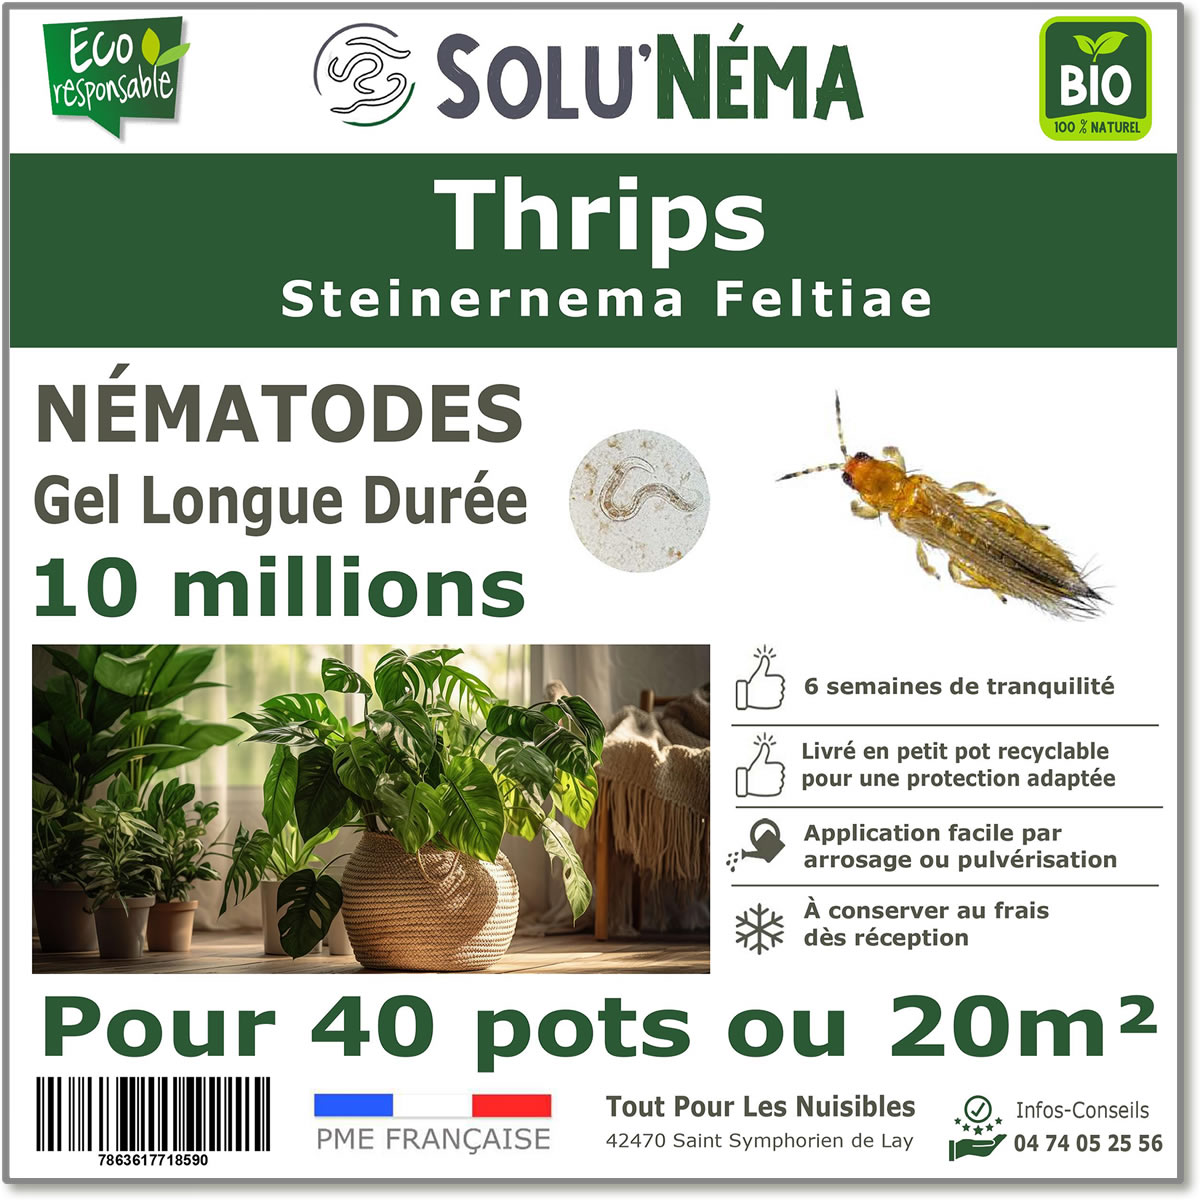 Nematodes (SF) Solunema for Thrips 10 million SF